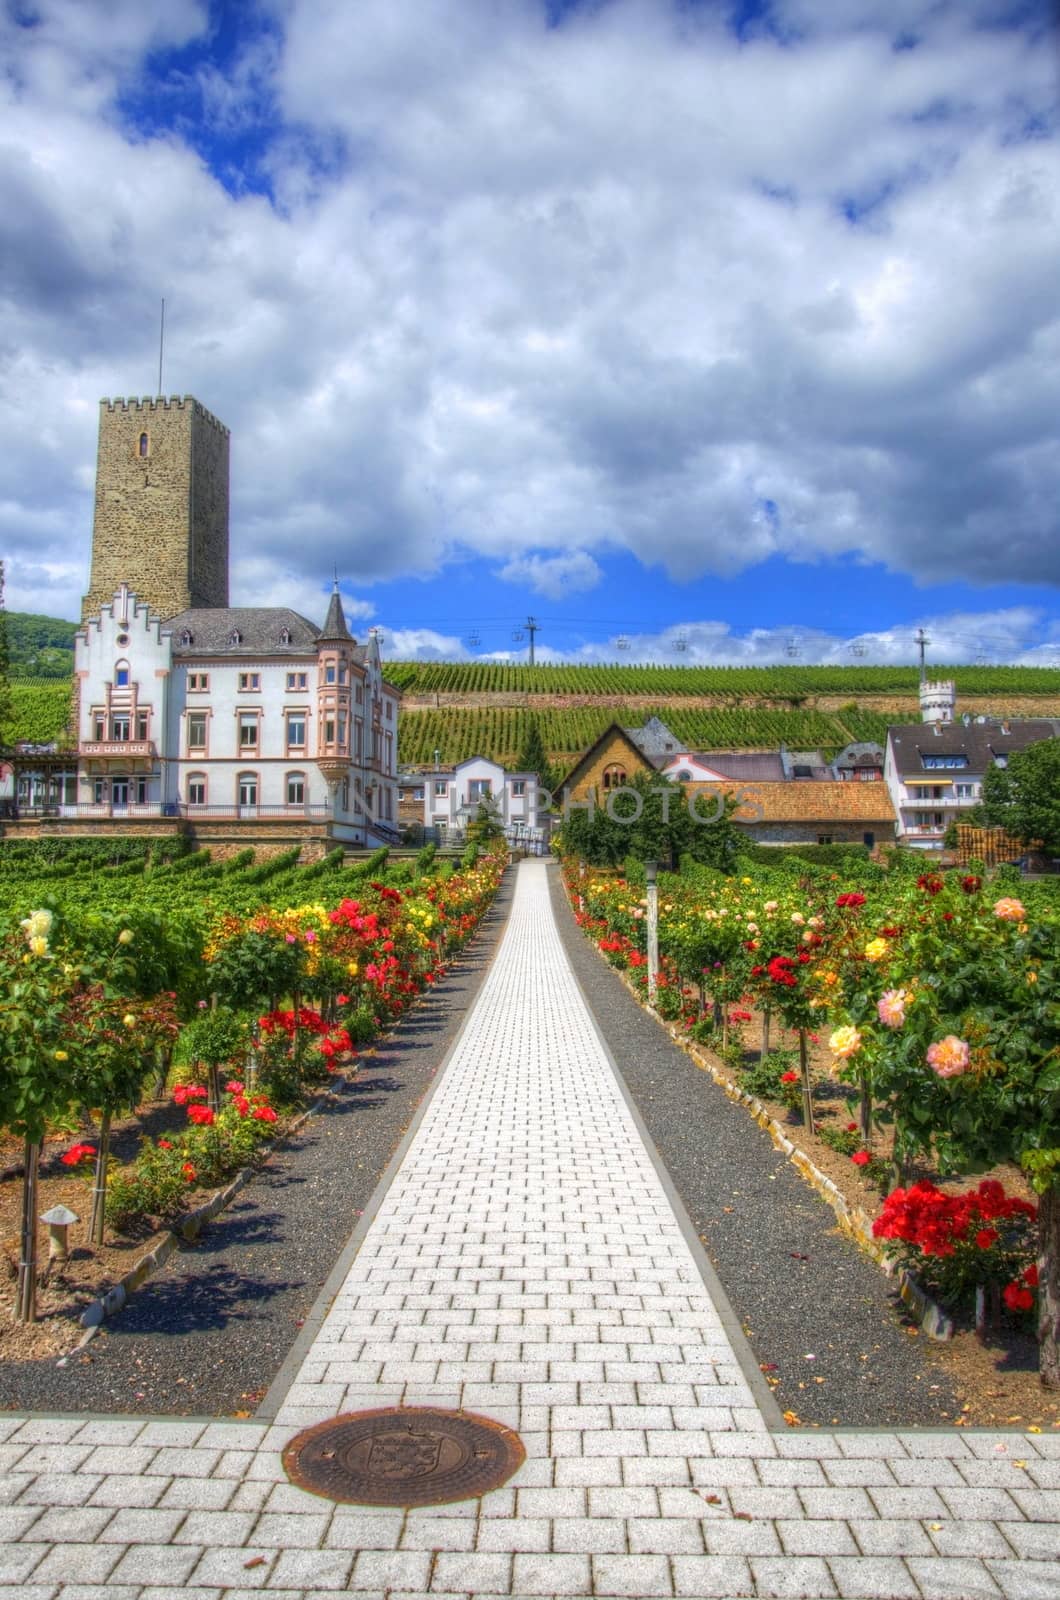 Footpath with flowers in Ruedesheim, Rhein-main-pfalz, Germany.